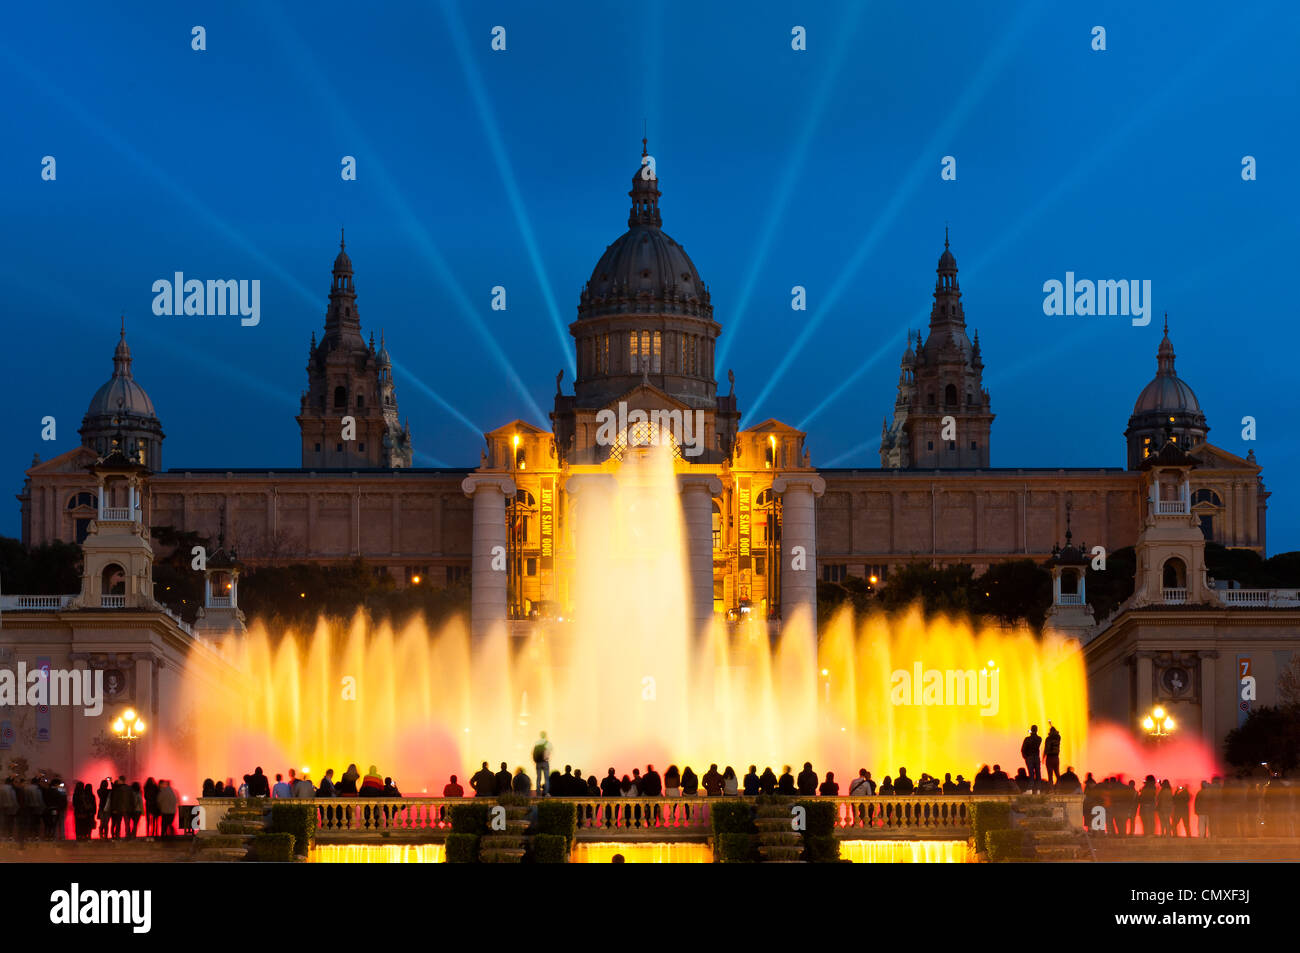 Font Magica or Magic Fountain with Palau Nacional in the background, Barcelona, Catalonia, Spain Stock Photo